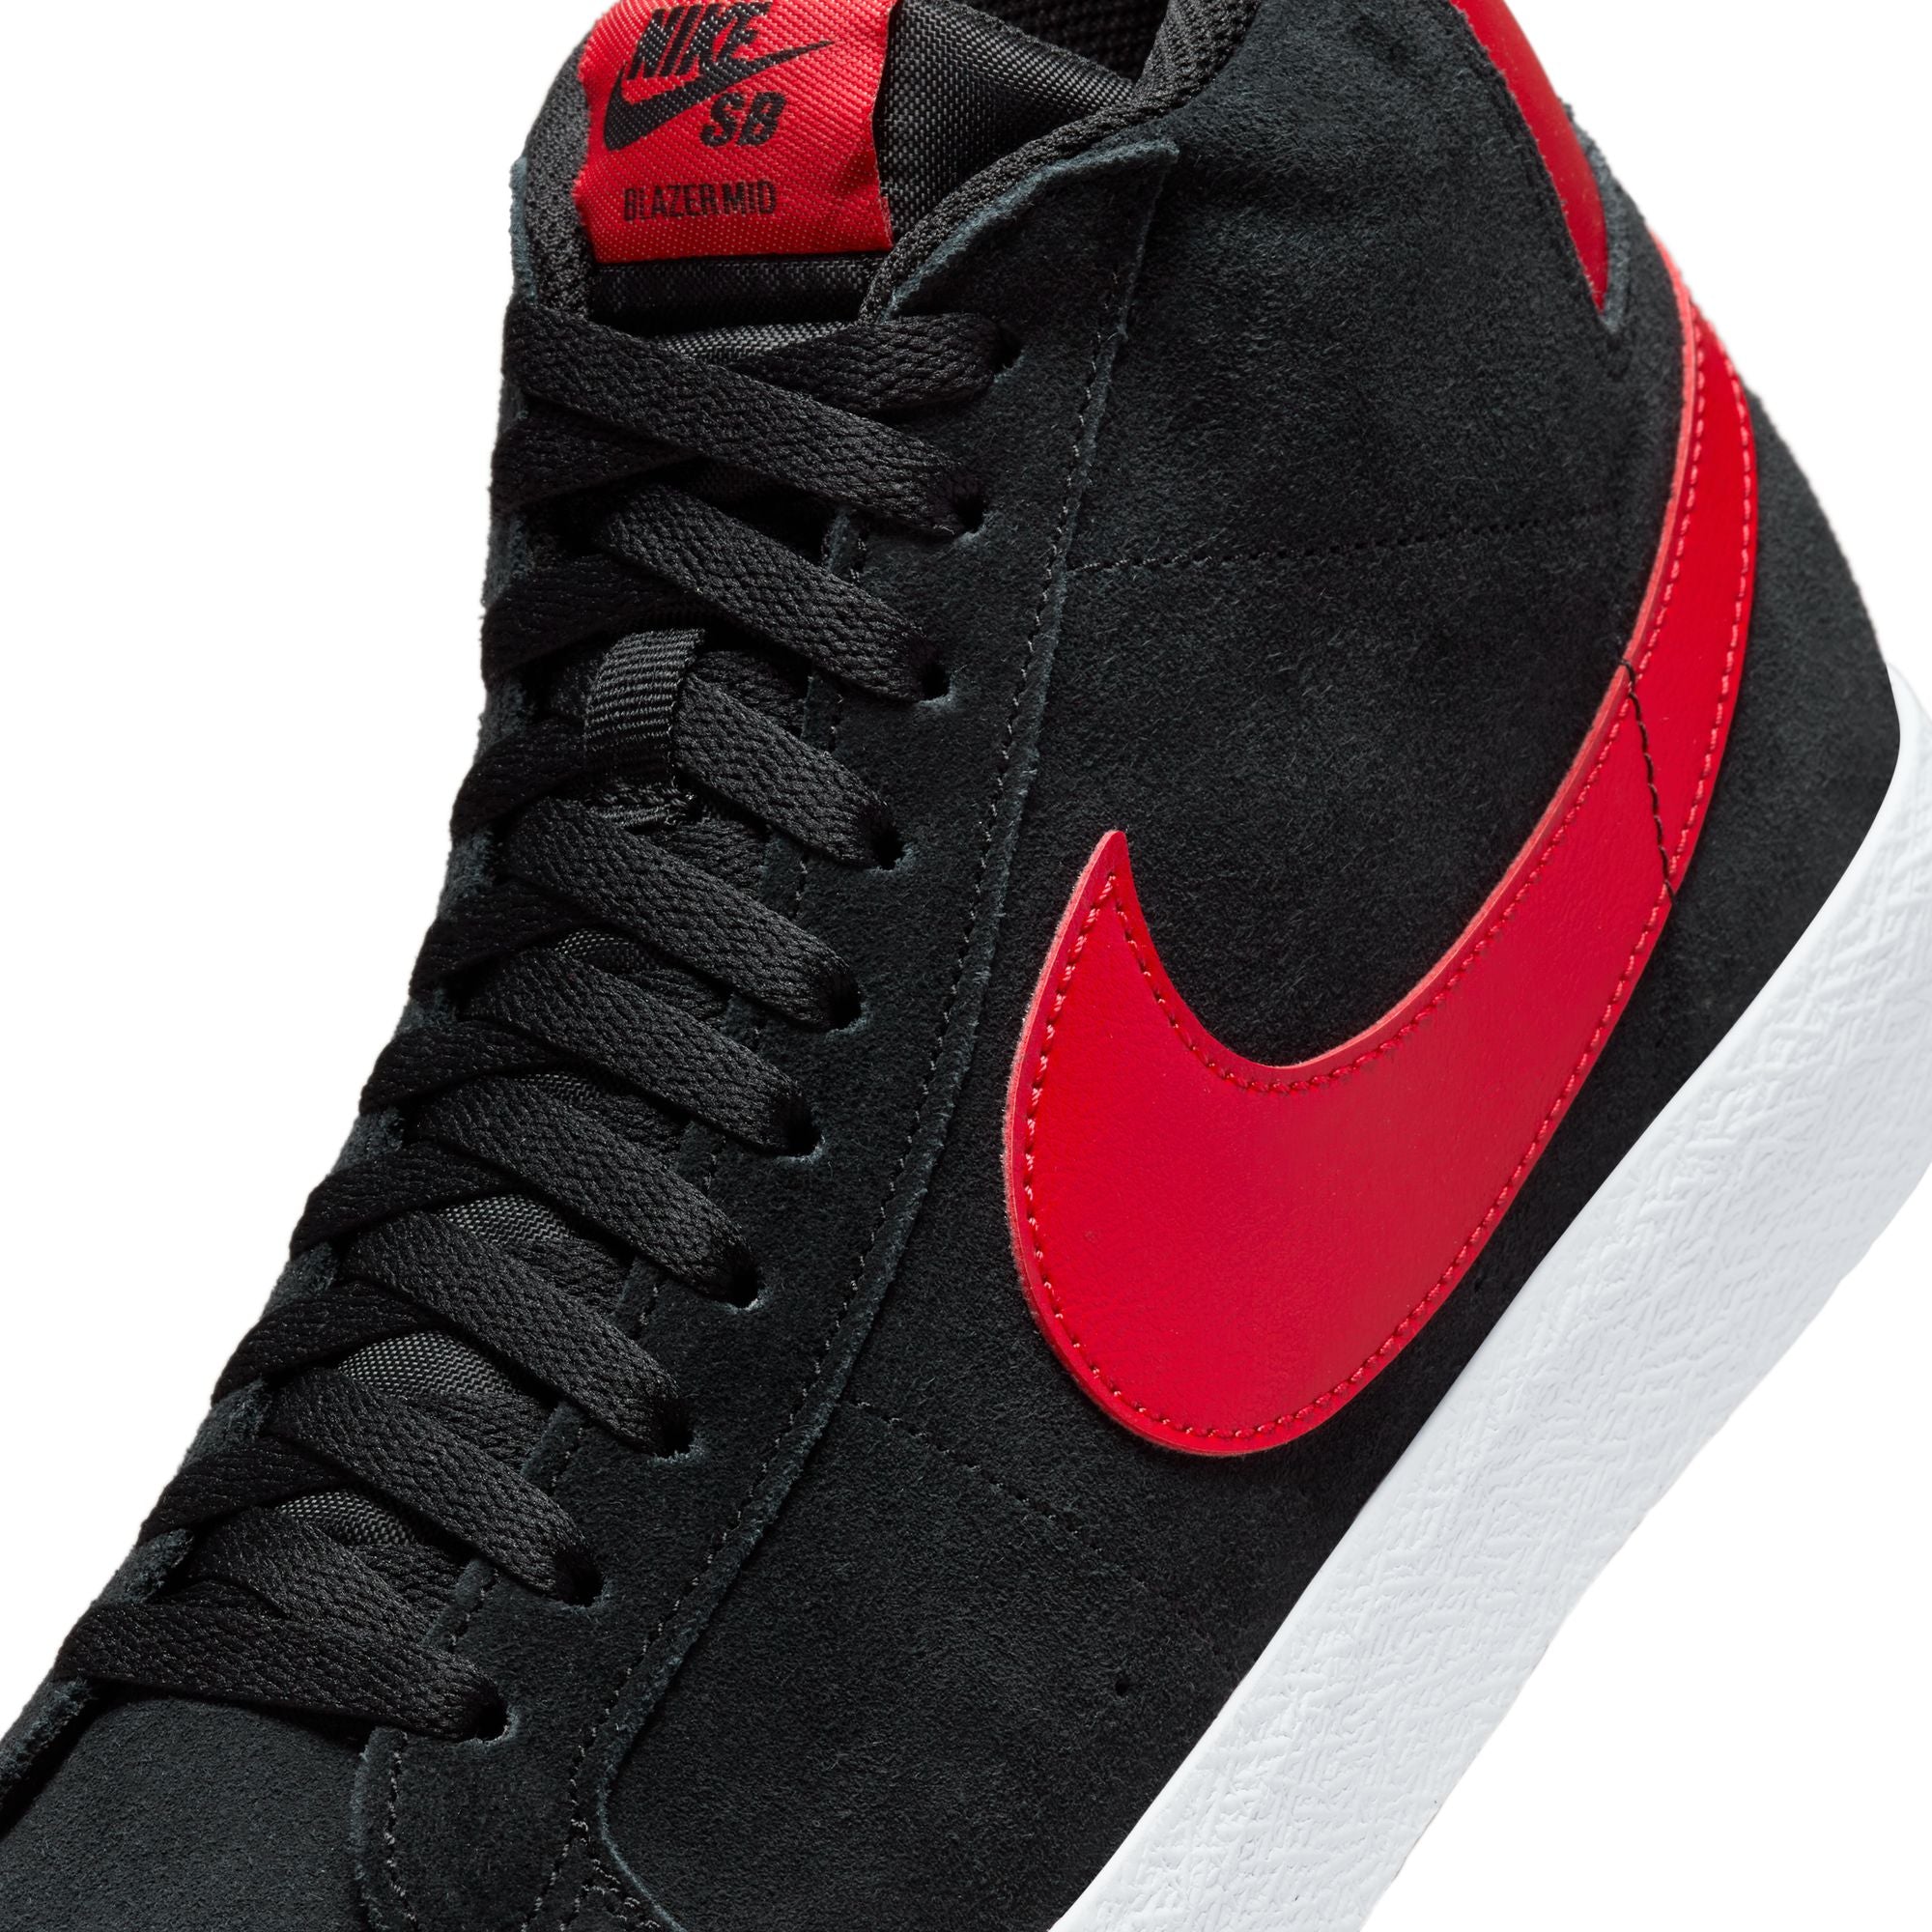 Nike SB Blazer Mid Shoes - Black/University Red-Black-White